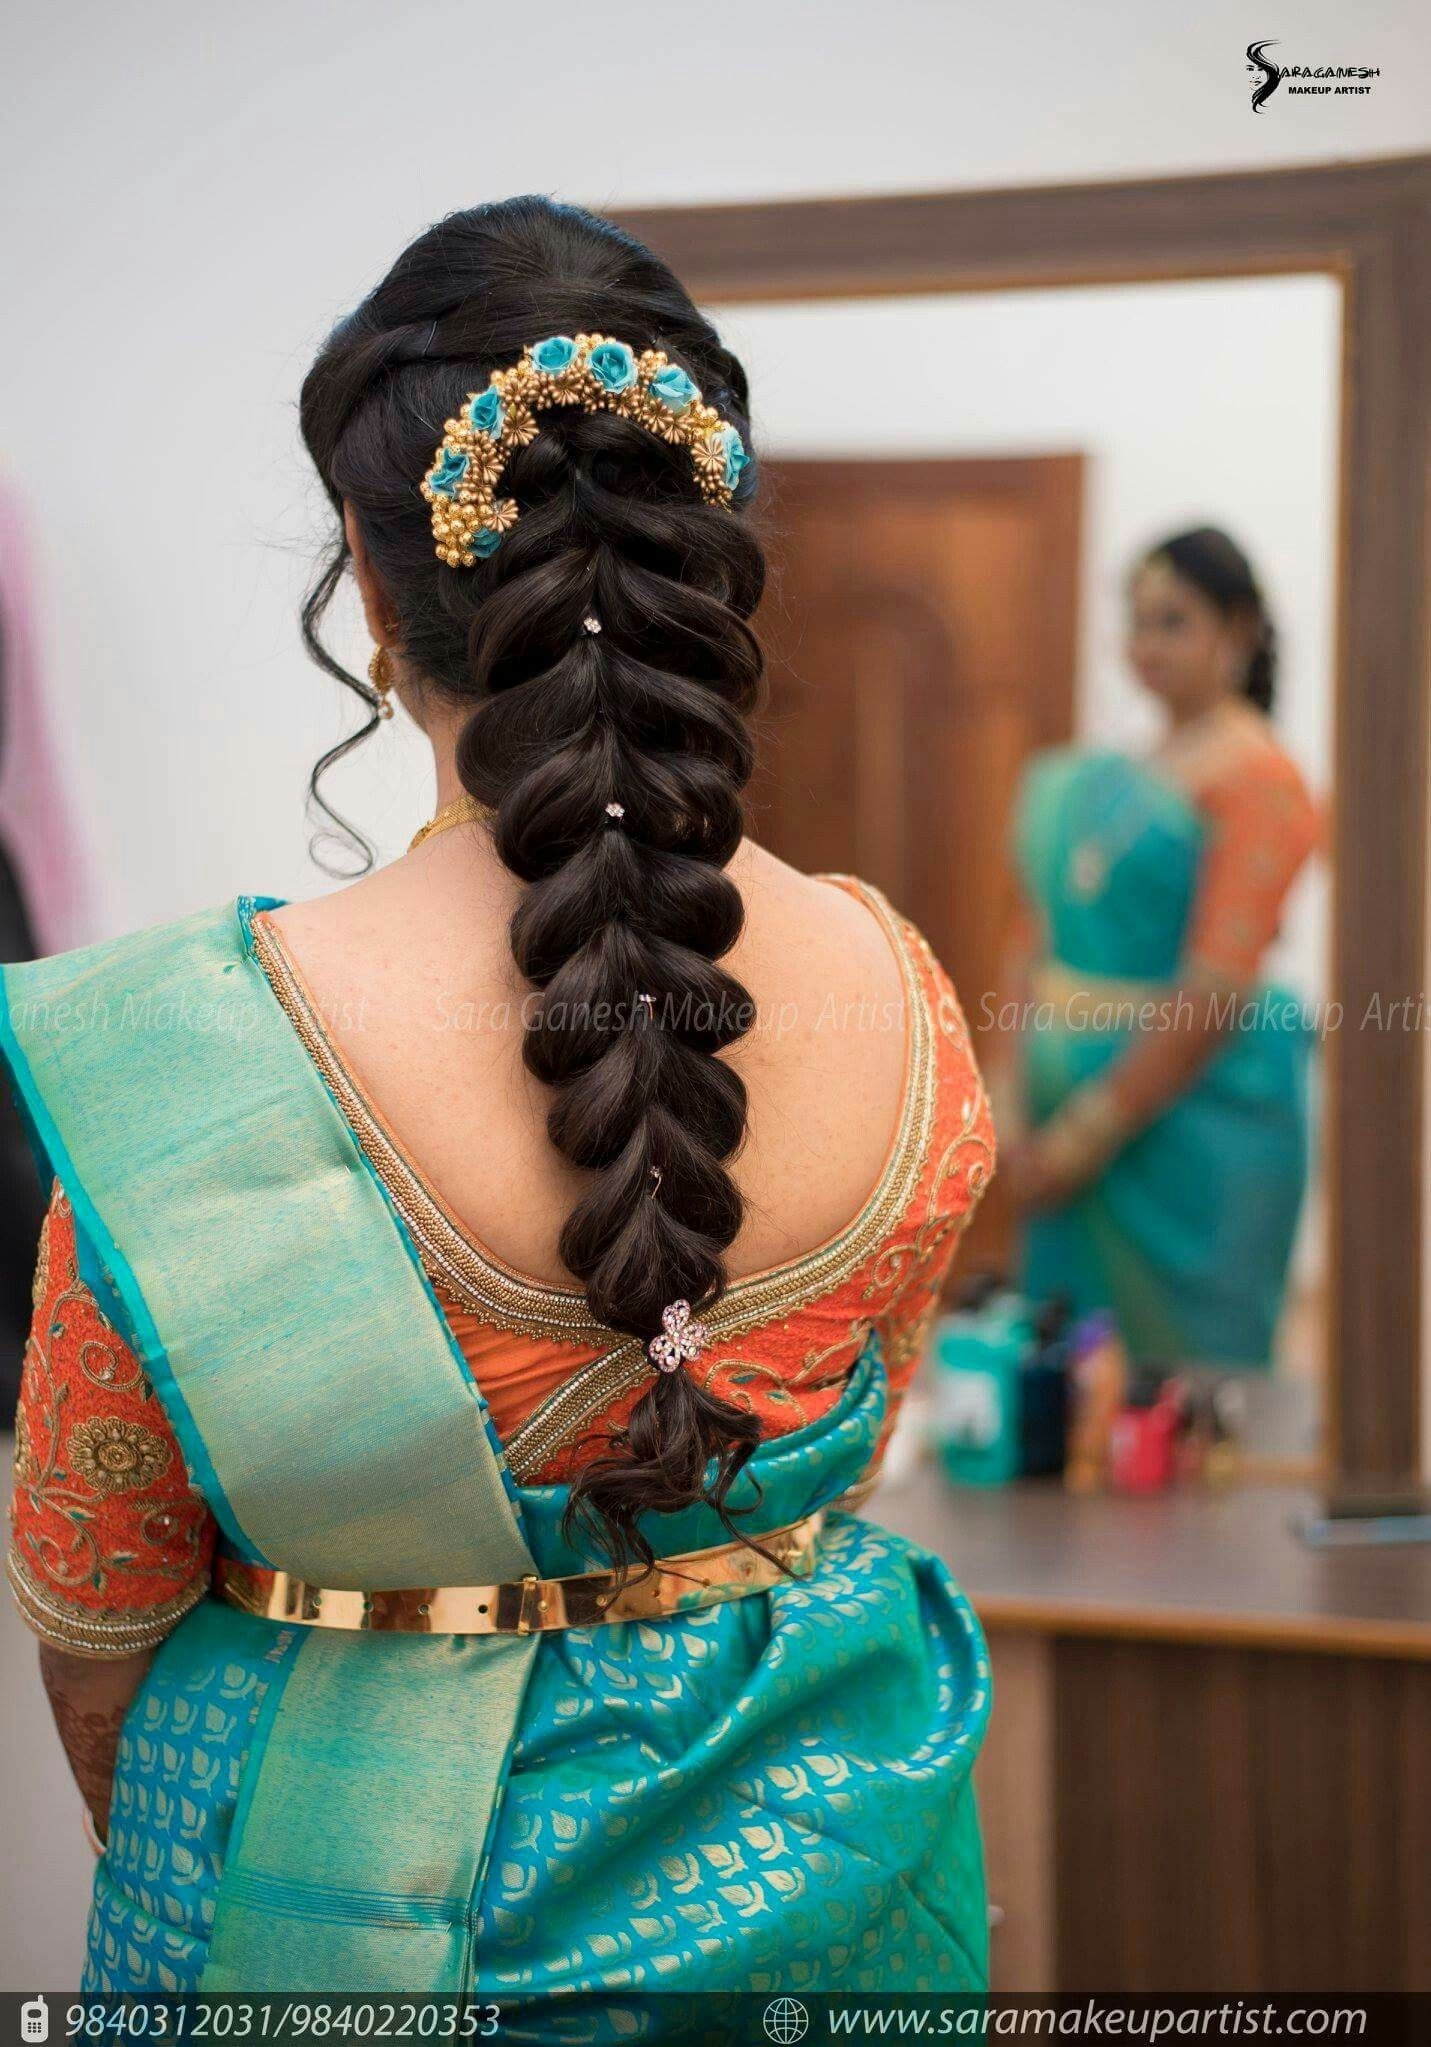 Hair Do | Hair Do | Indian Wedding Hairstyles, Wedding Hairstyles intended for Bridal Hairstyles For Long Hair South Indian